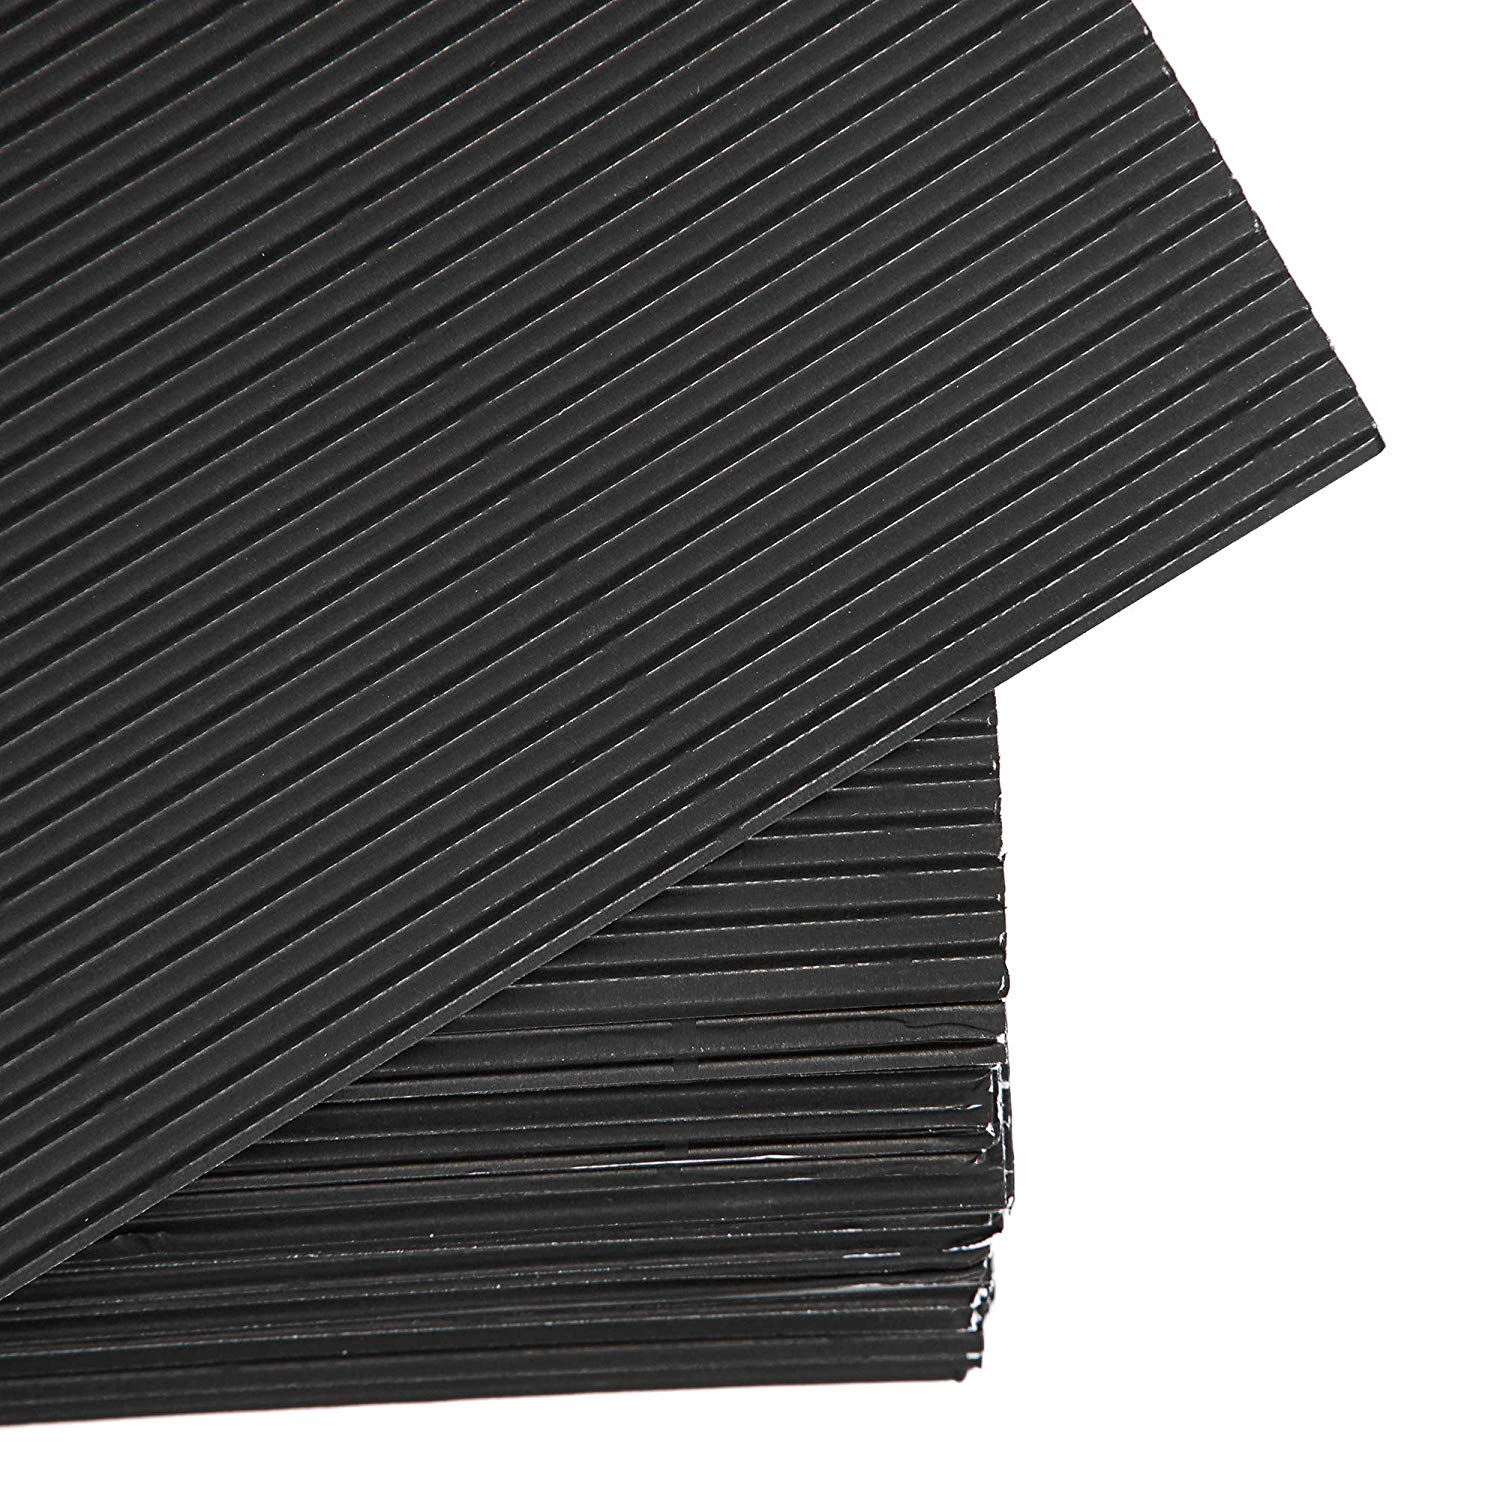 All Black Corrugated Cardboard Sheet - 16 x 16